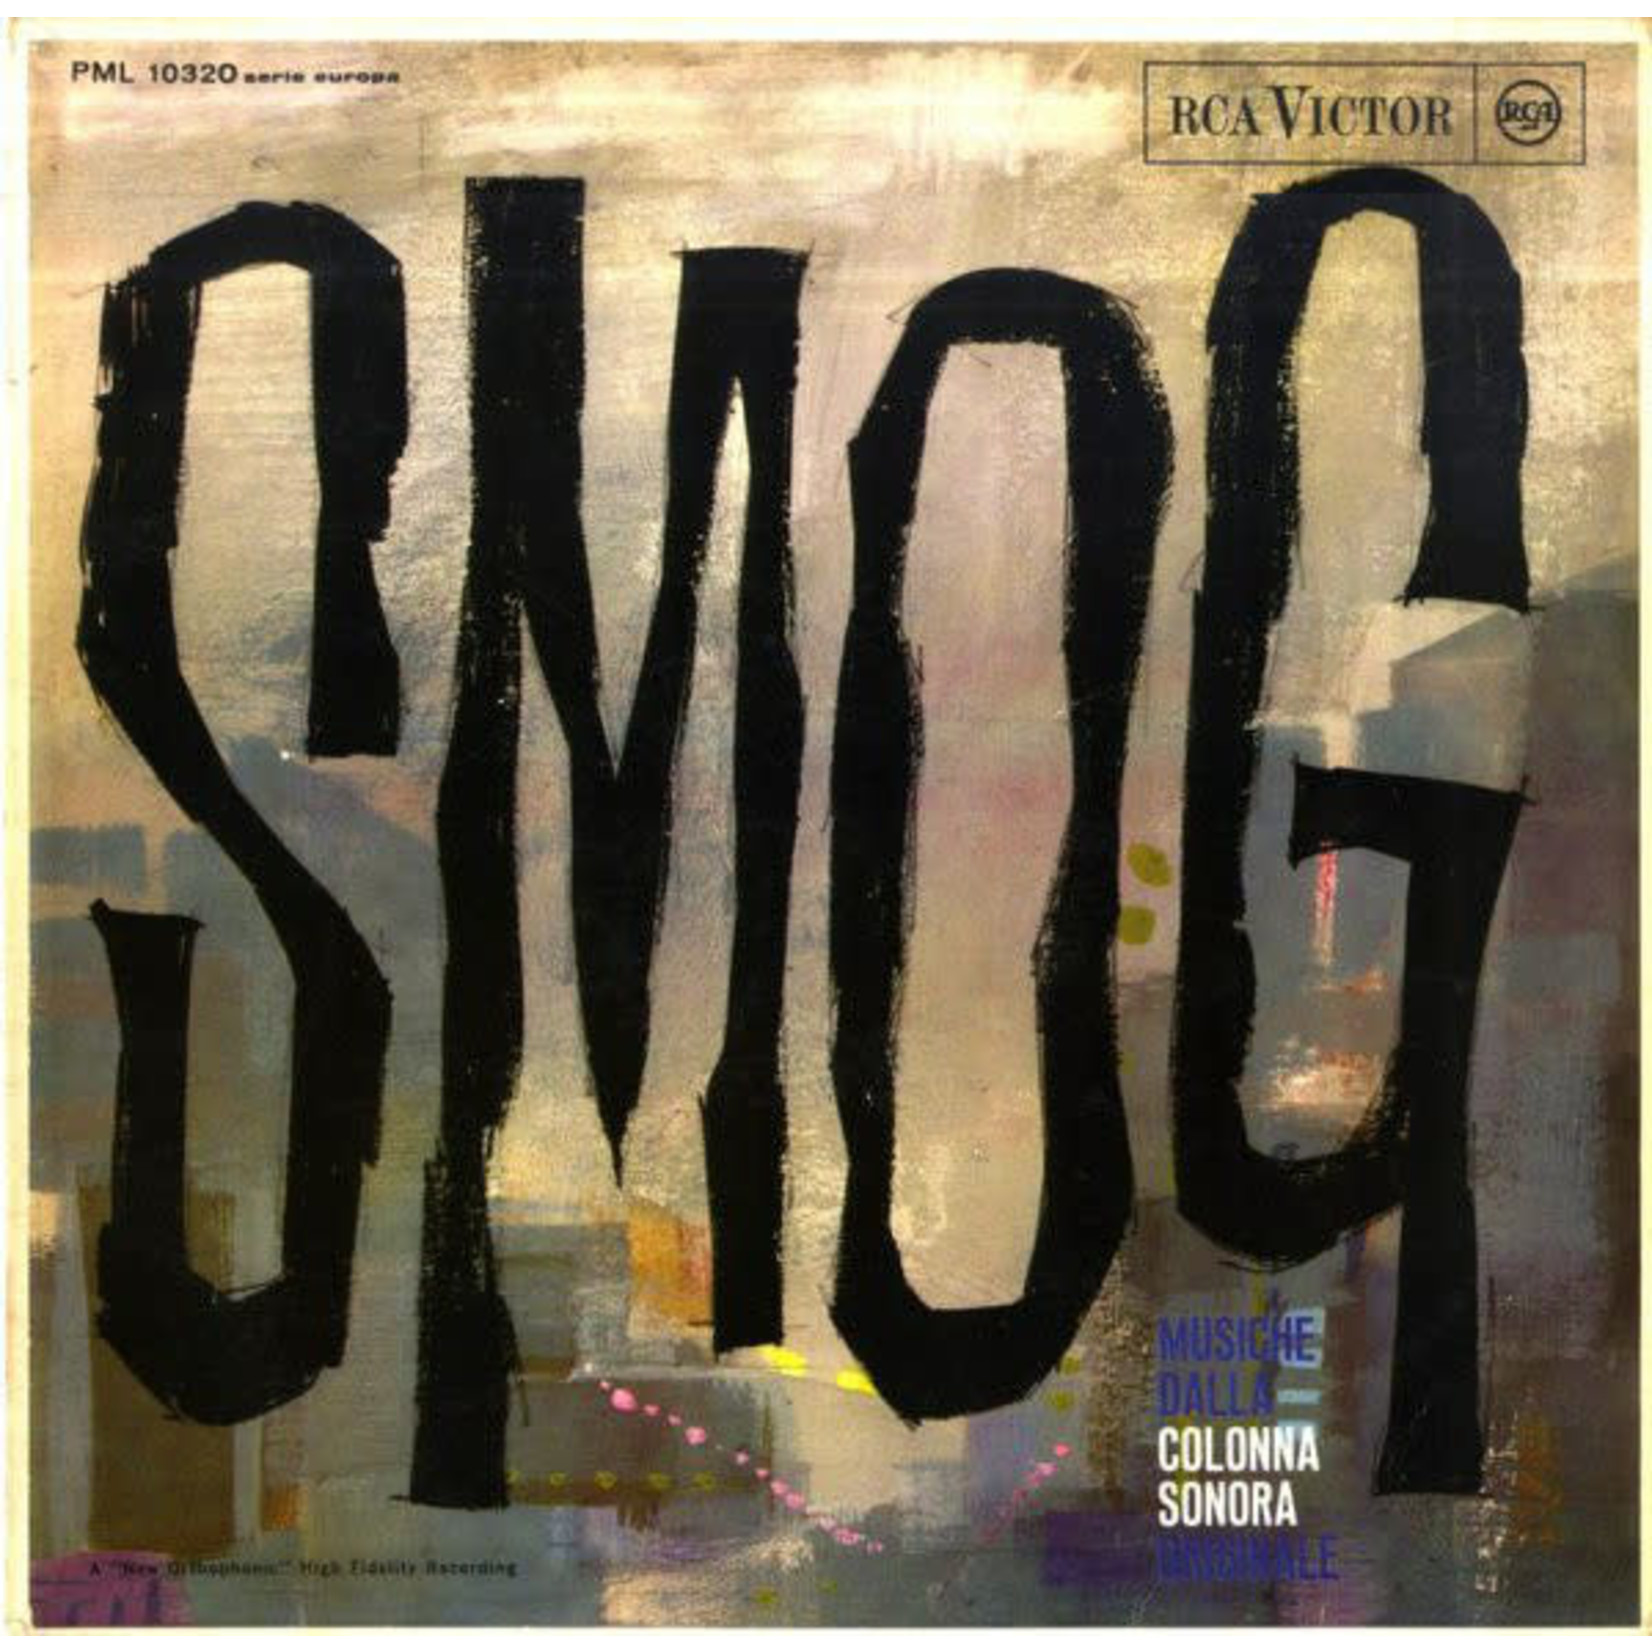 [New] Piero Umiliani & Chet Baker - Smog (Soundtrack)